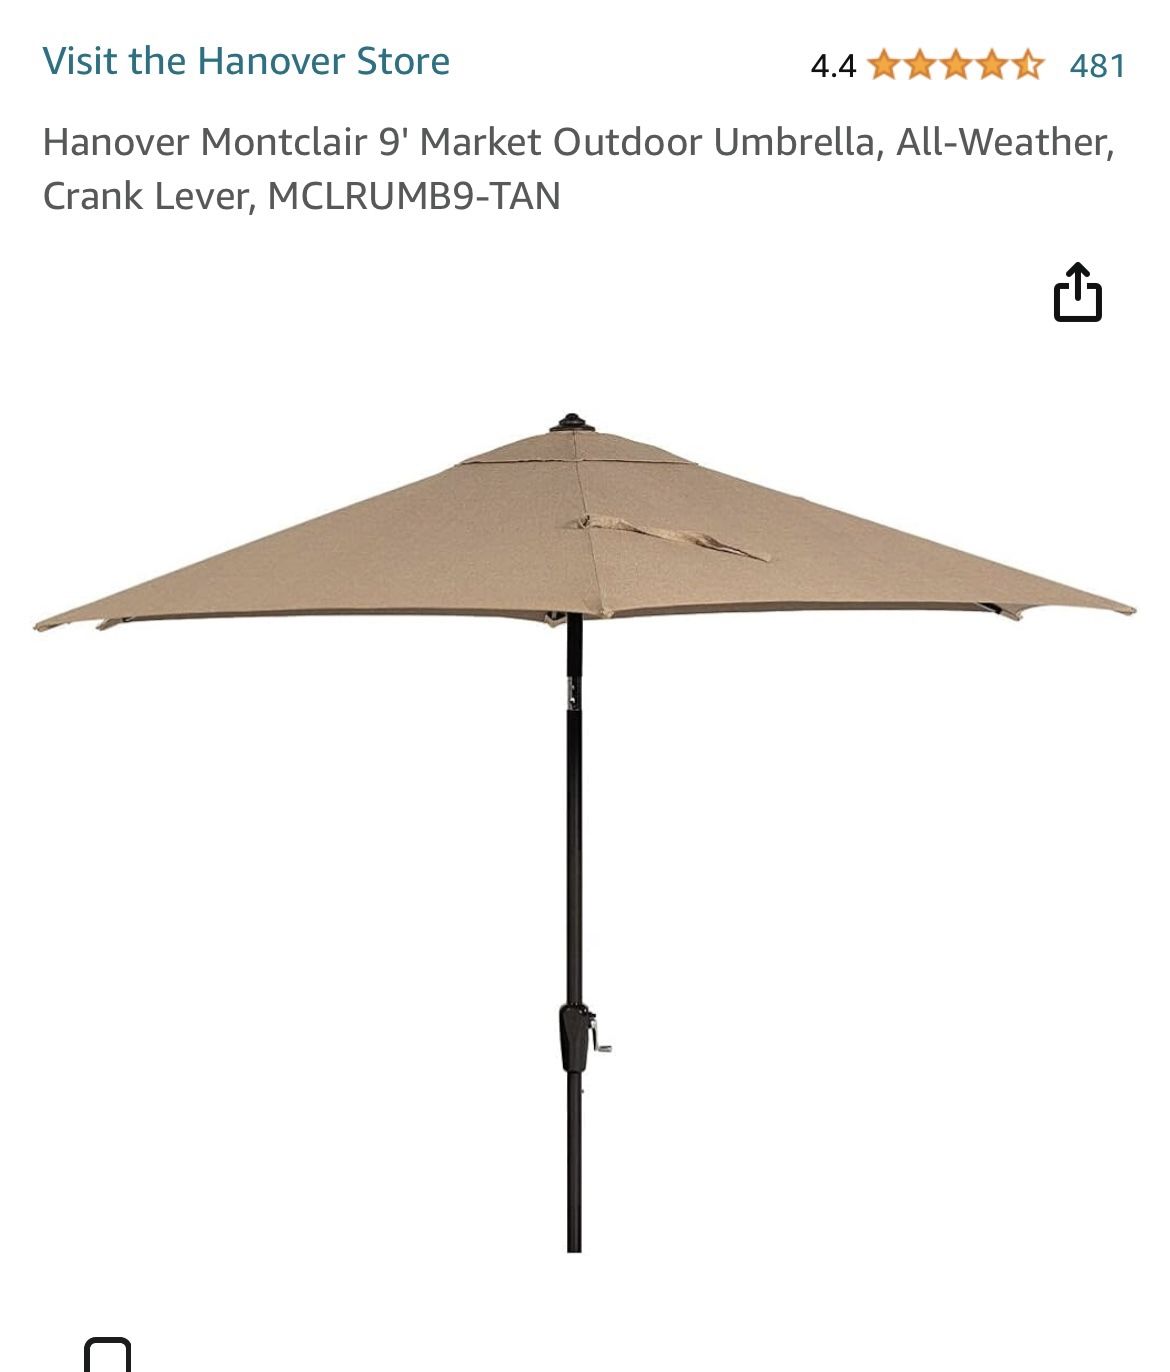 Hanover Montclair 9' Market Outdoor Umbrella, All-Weather, Crank Lever, MCLRUMB9-TAN NEW